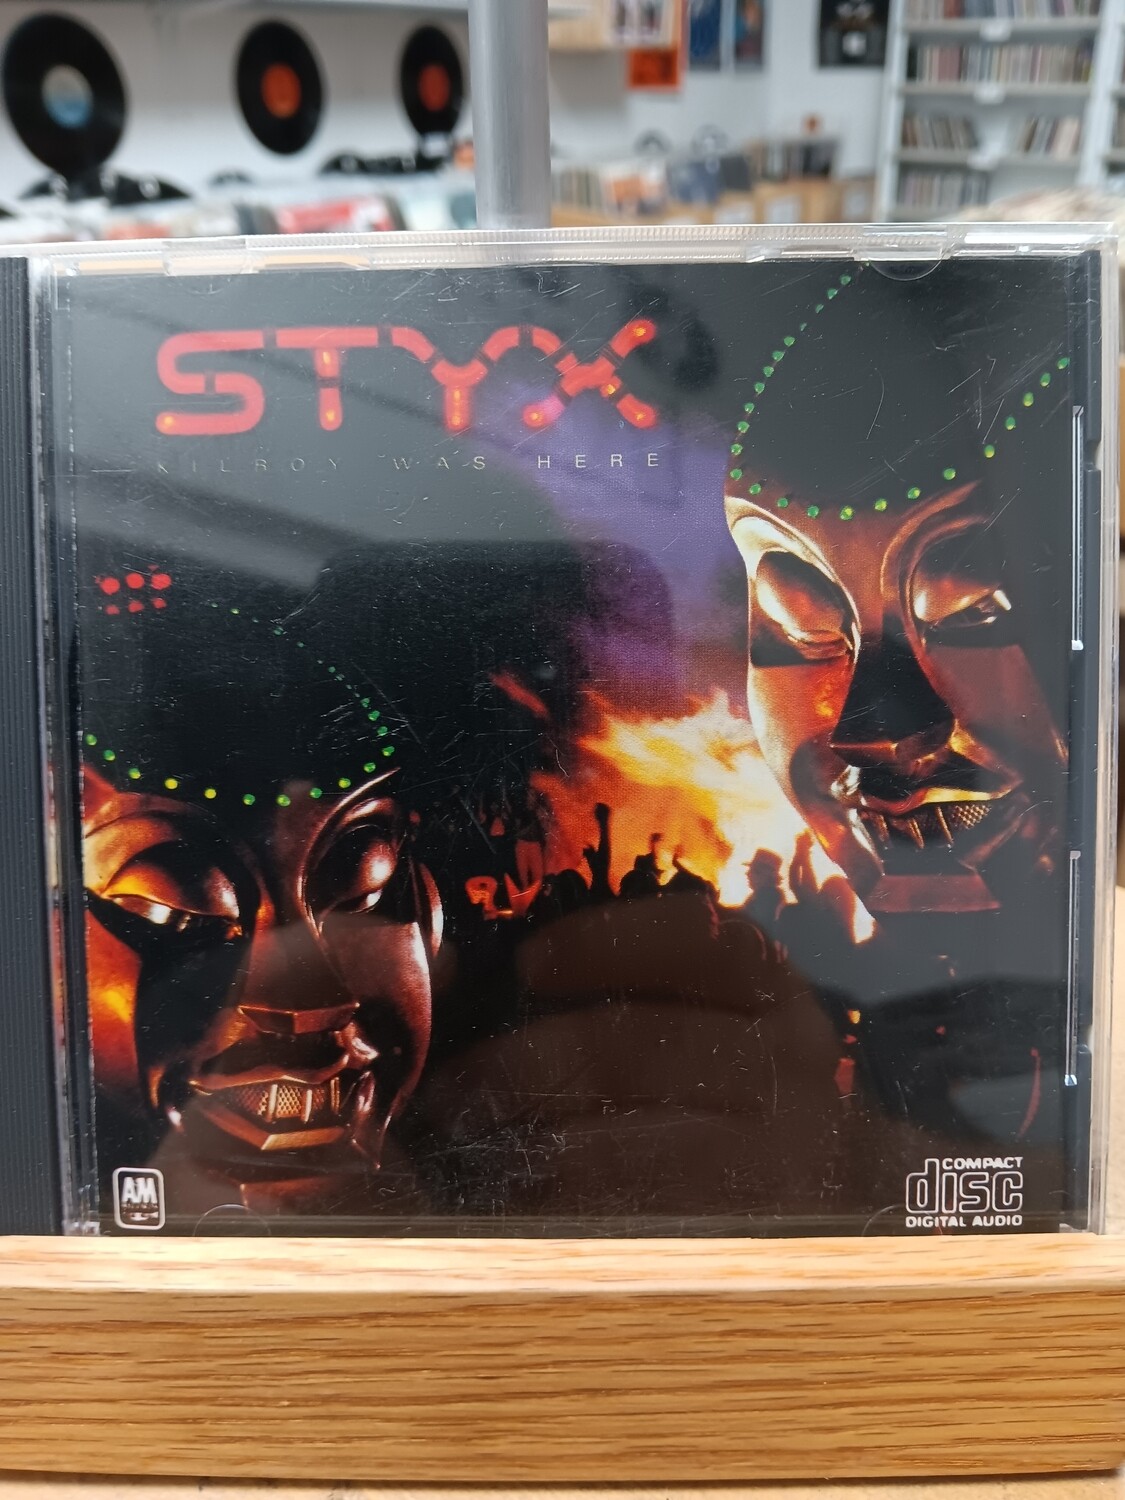 STYX - Killroy was here (CD)